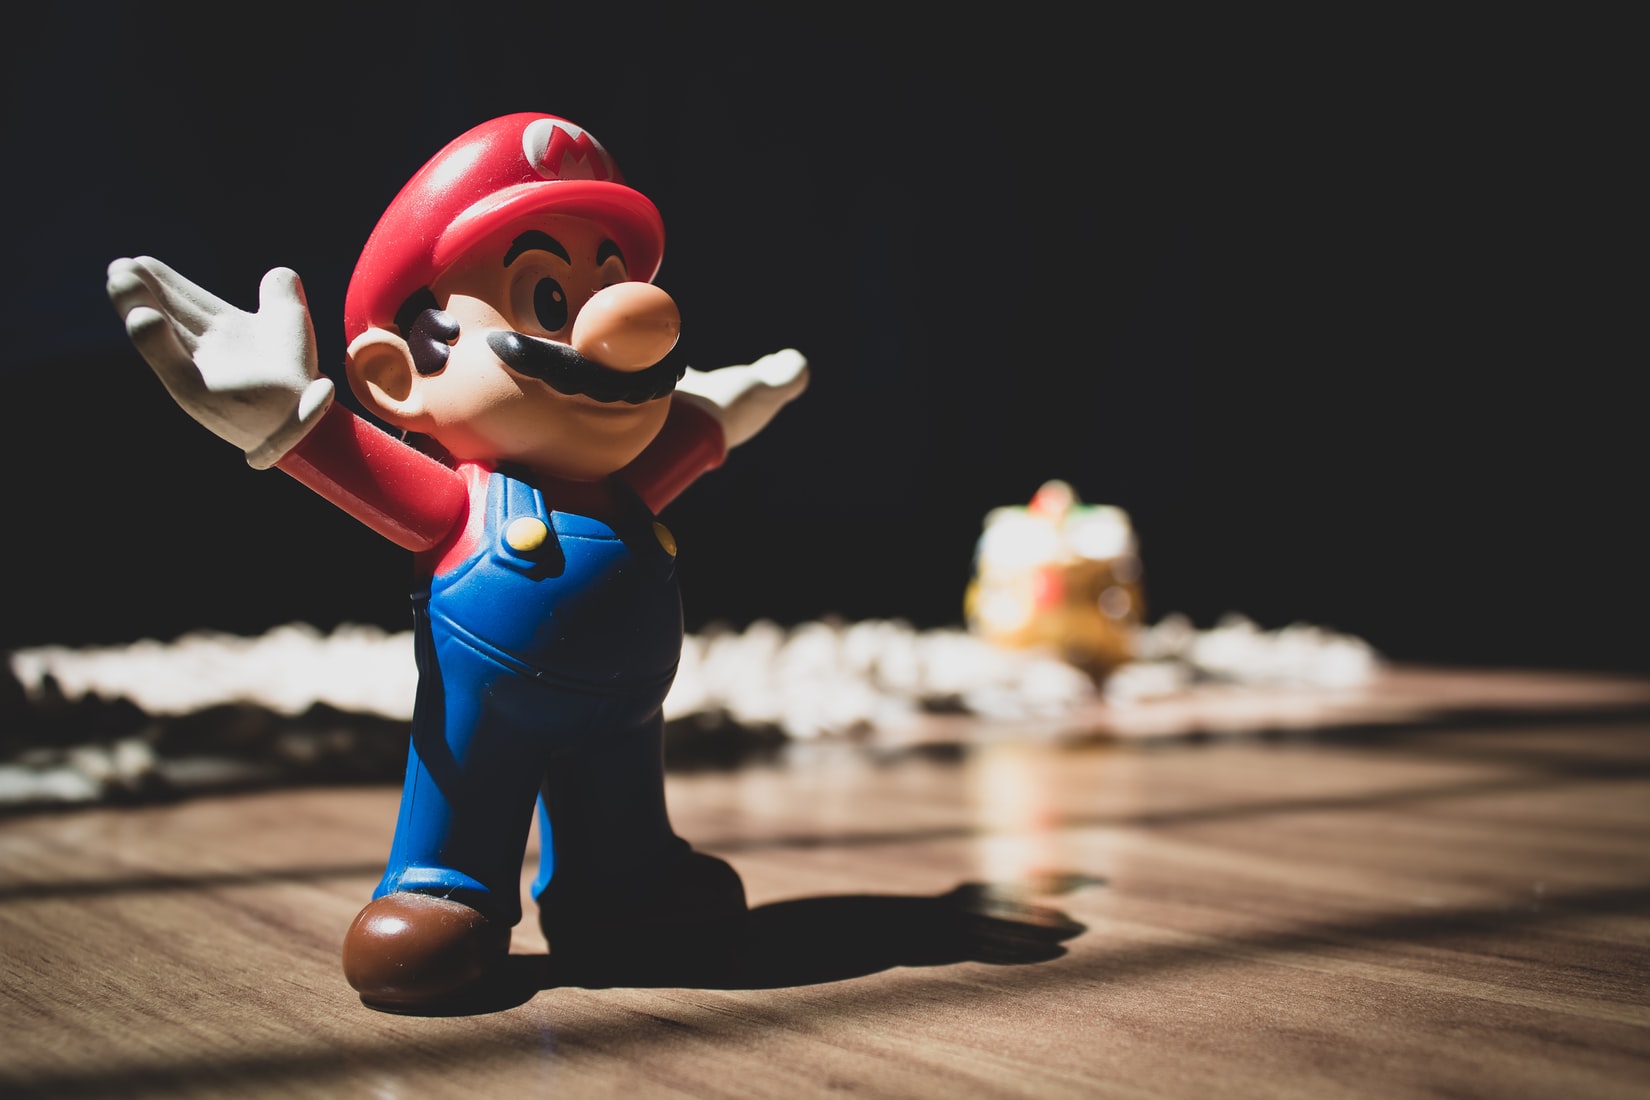 Photo of a Super Mario figurine on brown surface by Cláudio Luiz Castro on Unsplash